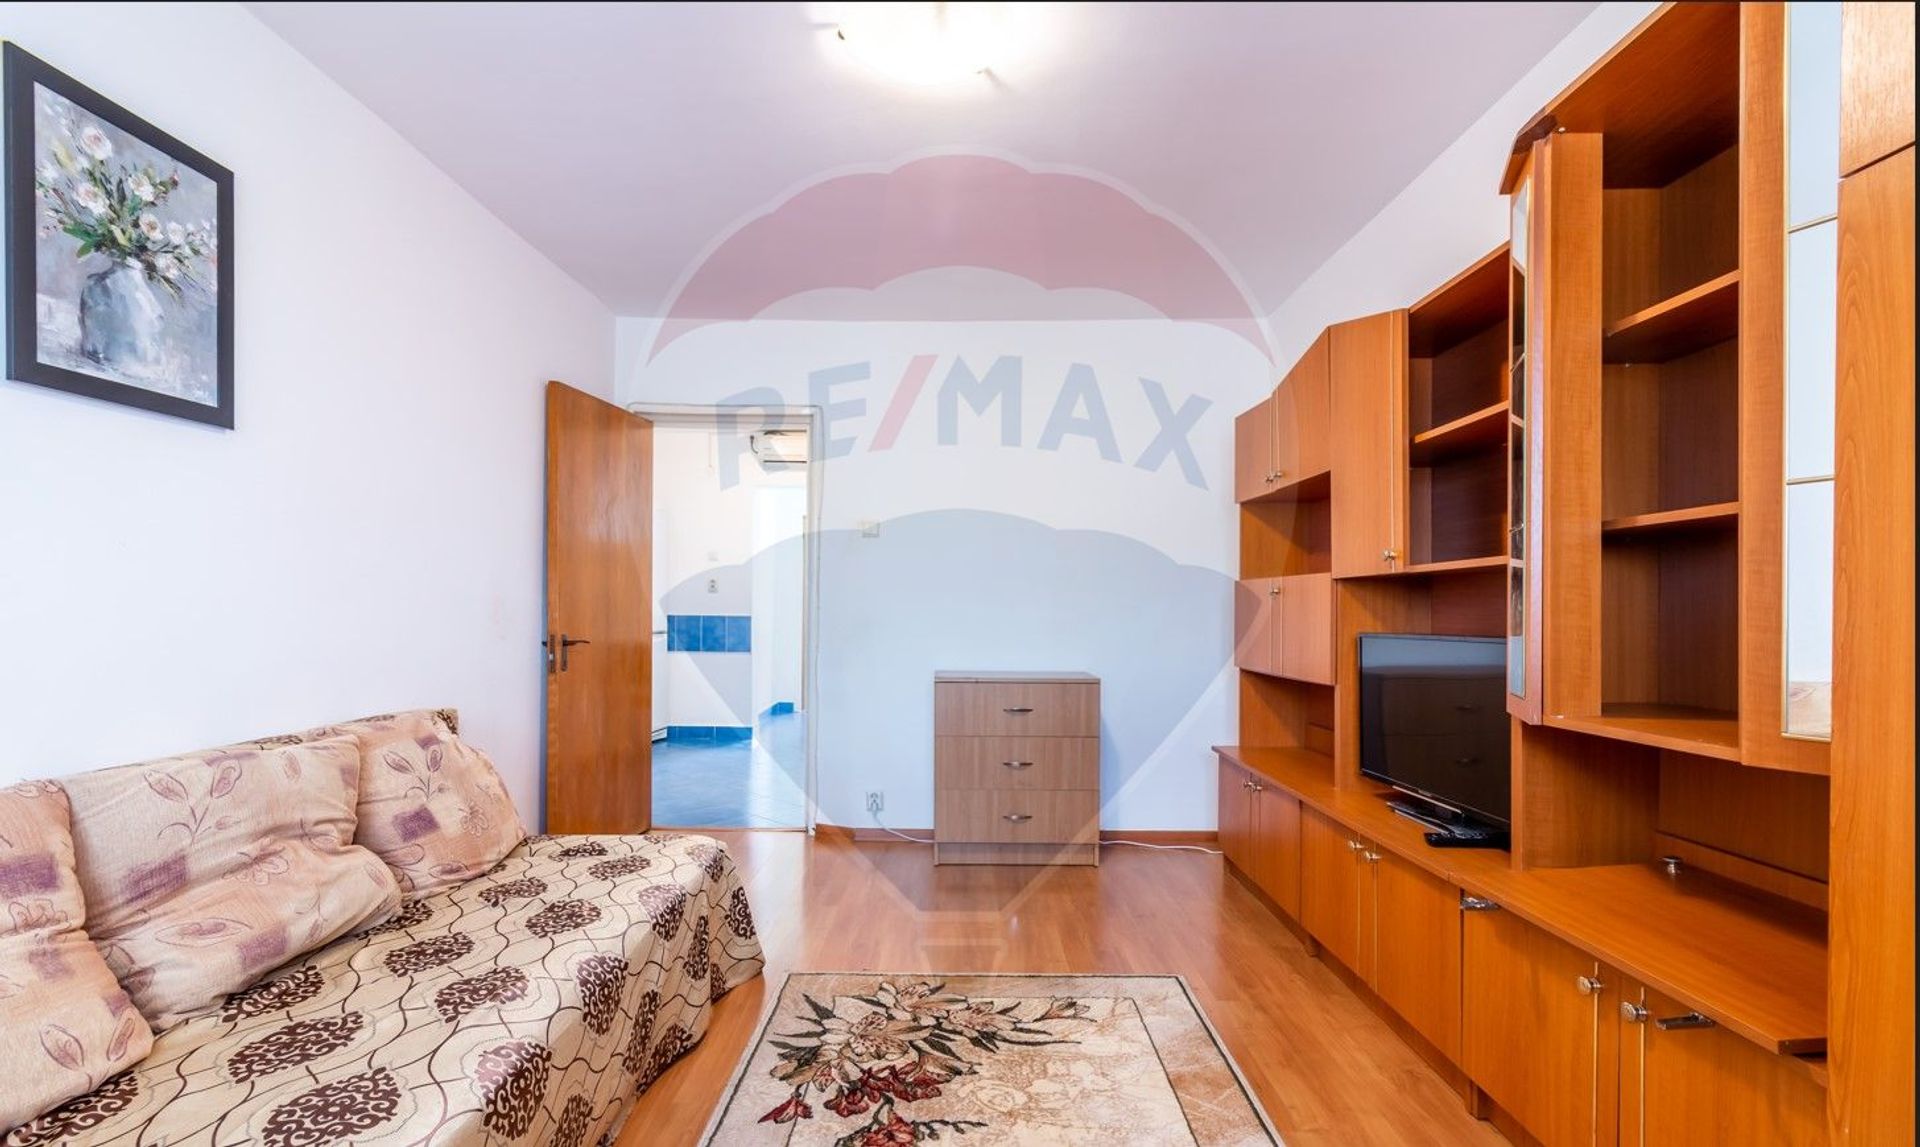 gall bladder secretly Immunity Apartament 2 camere vanzare Bucuresti, Morarilor RMX101095 | RE/MAX Romania